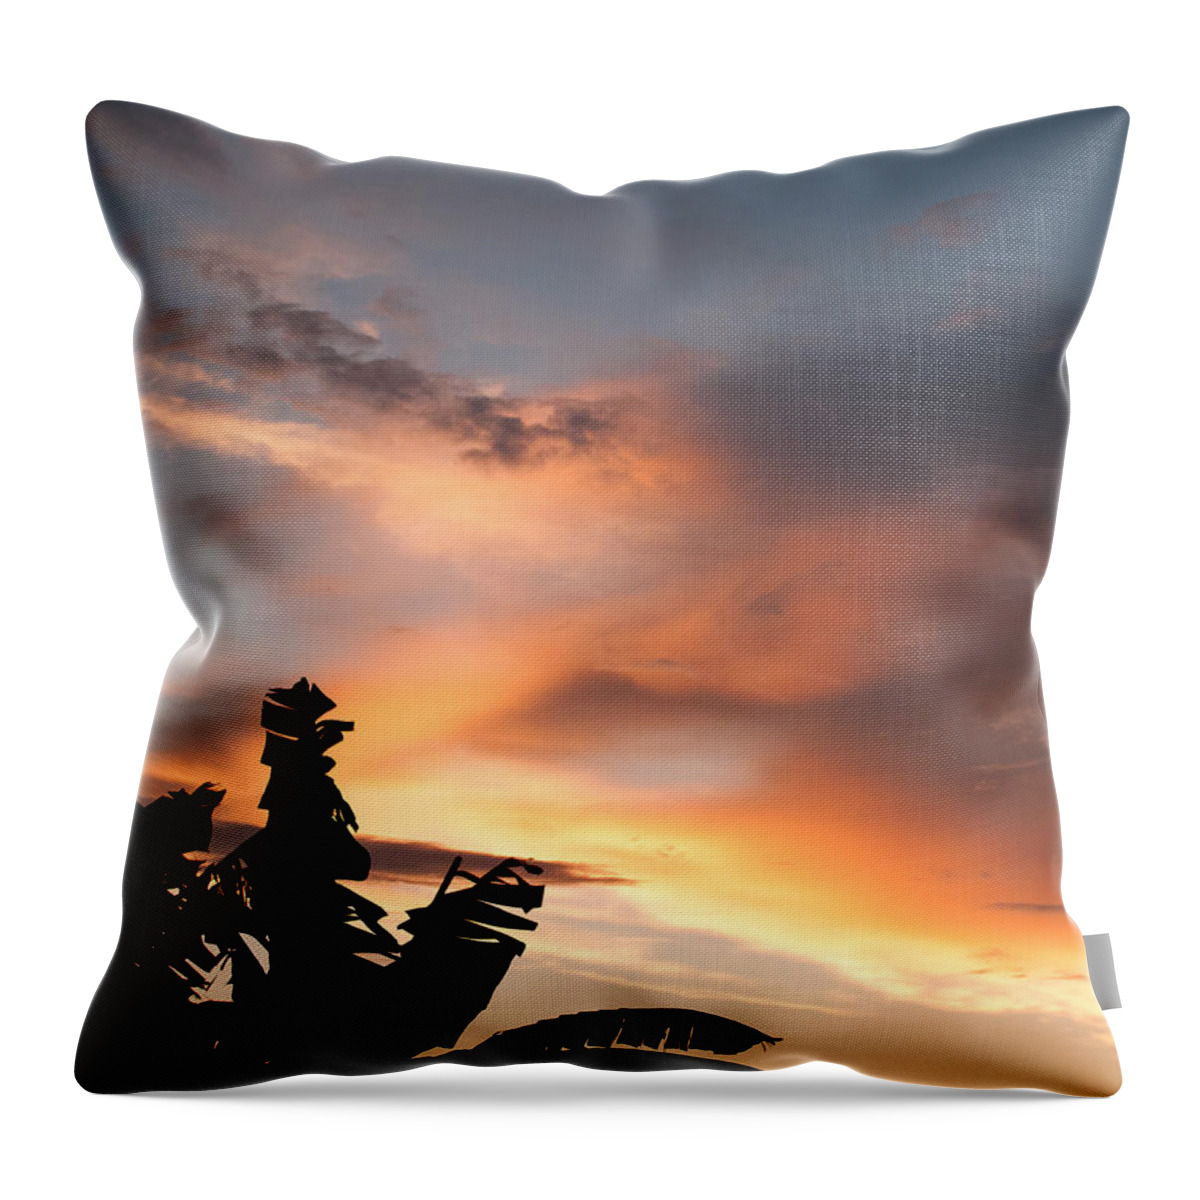 Abuja Throw Pillow featuring the photograph Abuja Sunset by Hakon Soreide